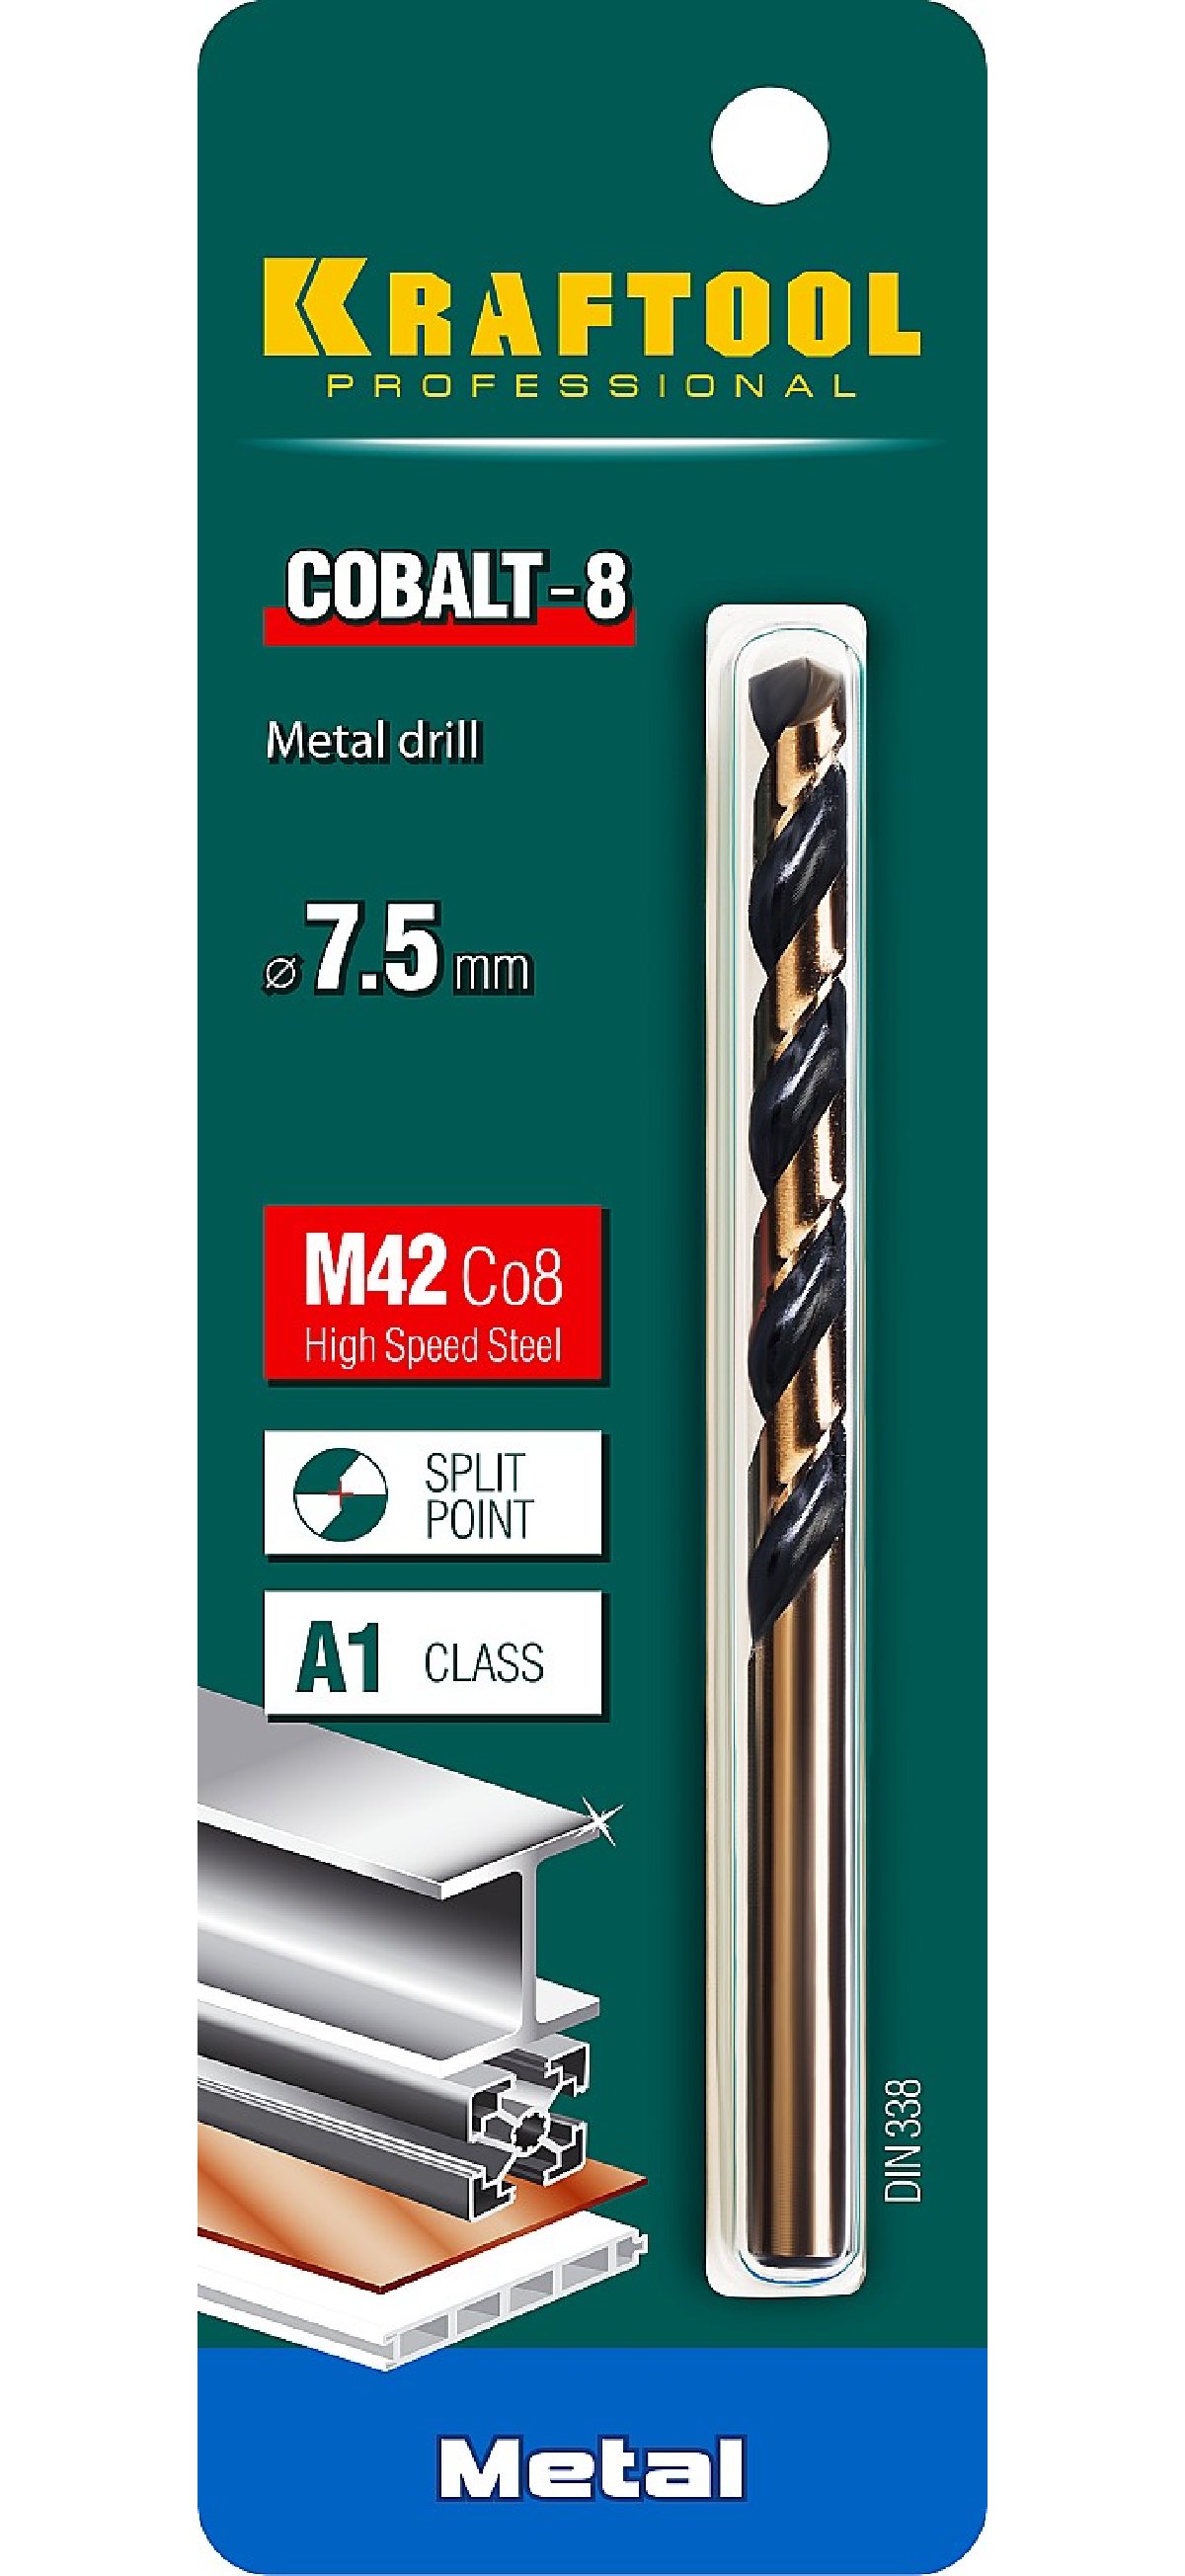 KRAFTOOL COBALT 7.5 х109мм, Сверло по металлу HSS-Co(8проц.) , сталь М42(S2-10-1-8), (29656-7.5)